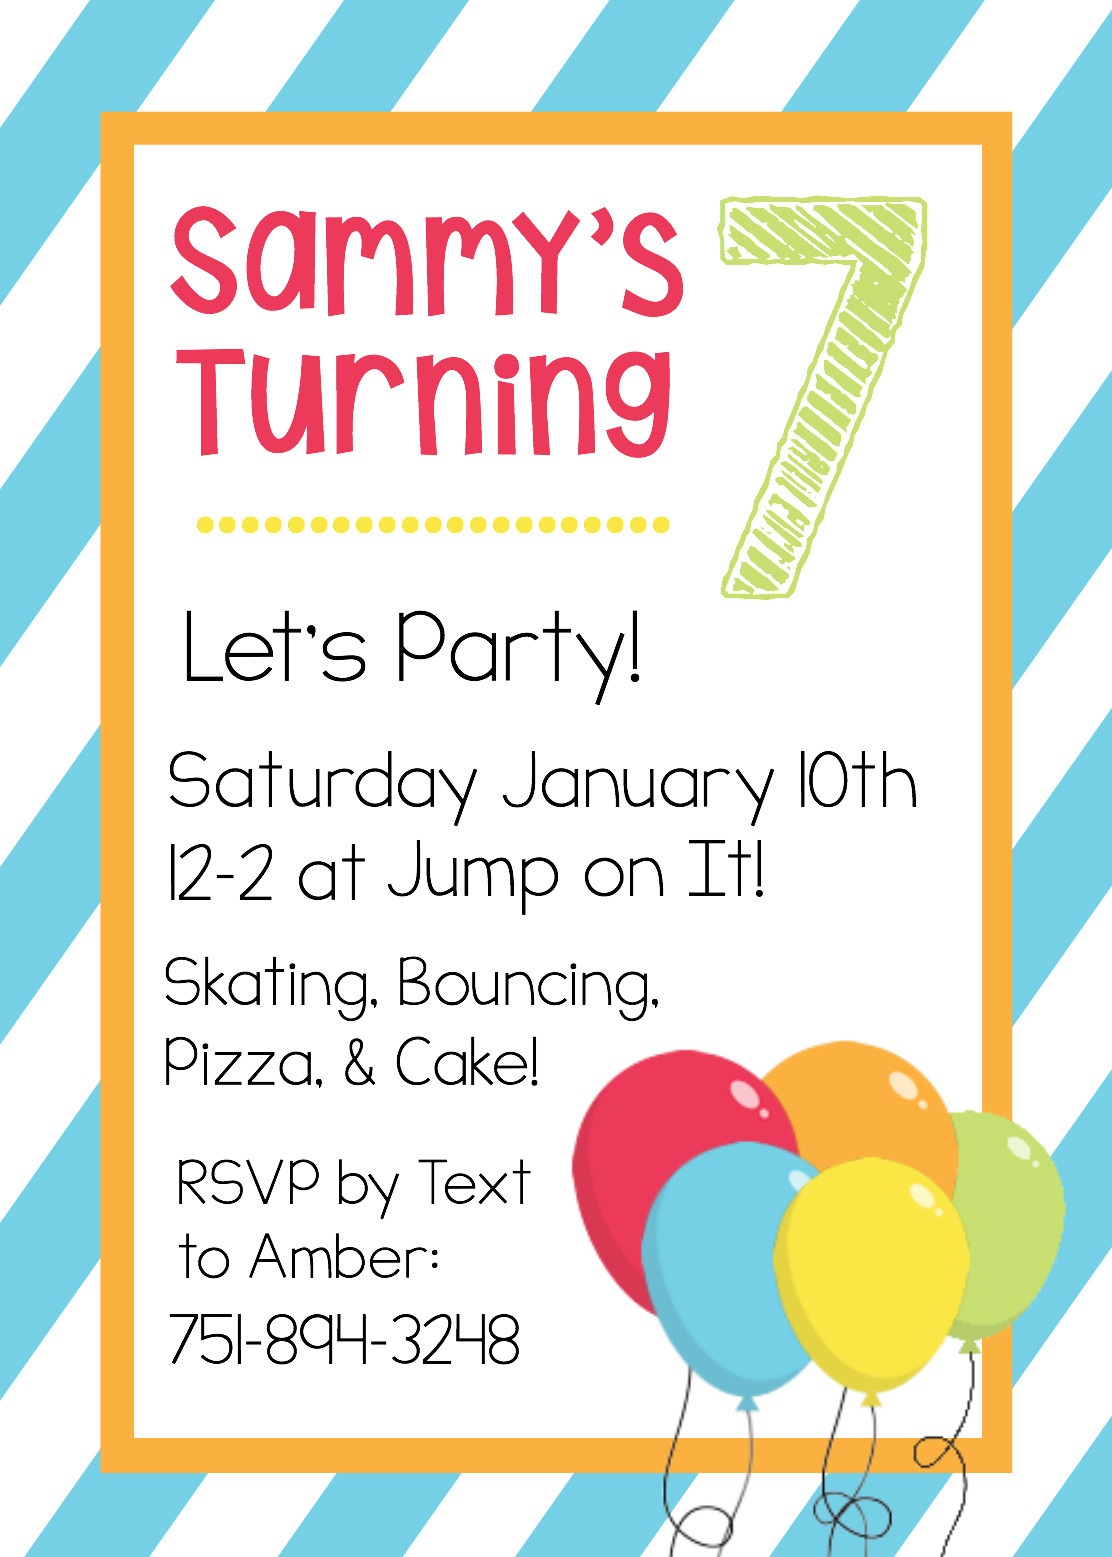 Free Birthday Party Invitations
 Free Printable Birthday Invitation Templates